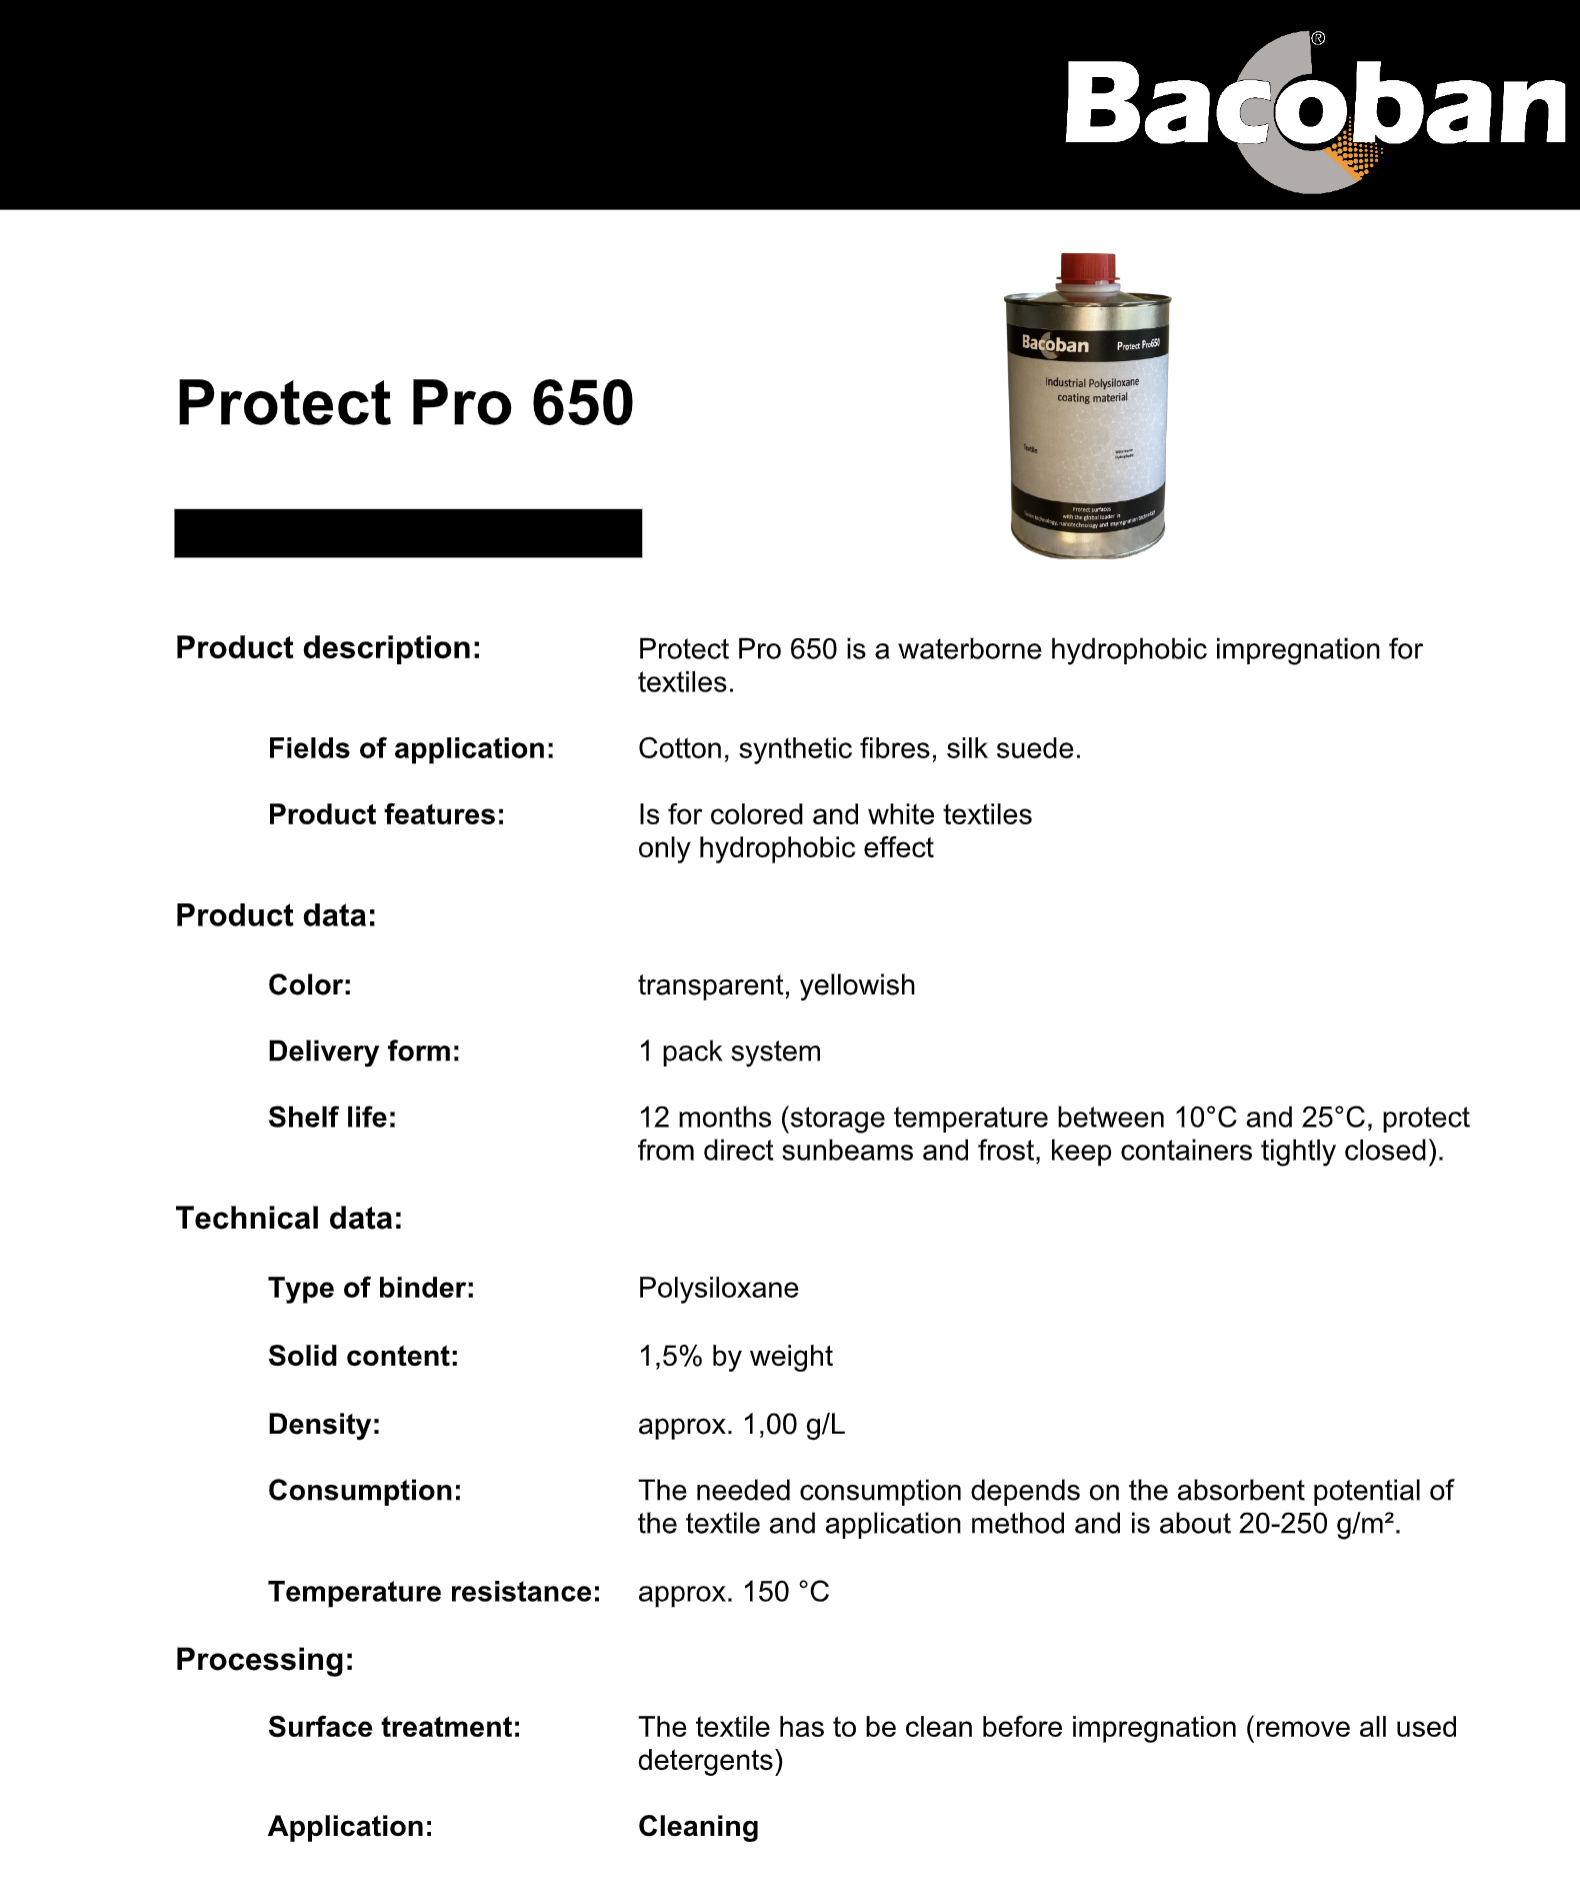 Protect Pro 625 details